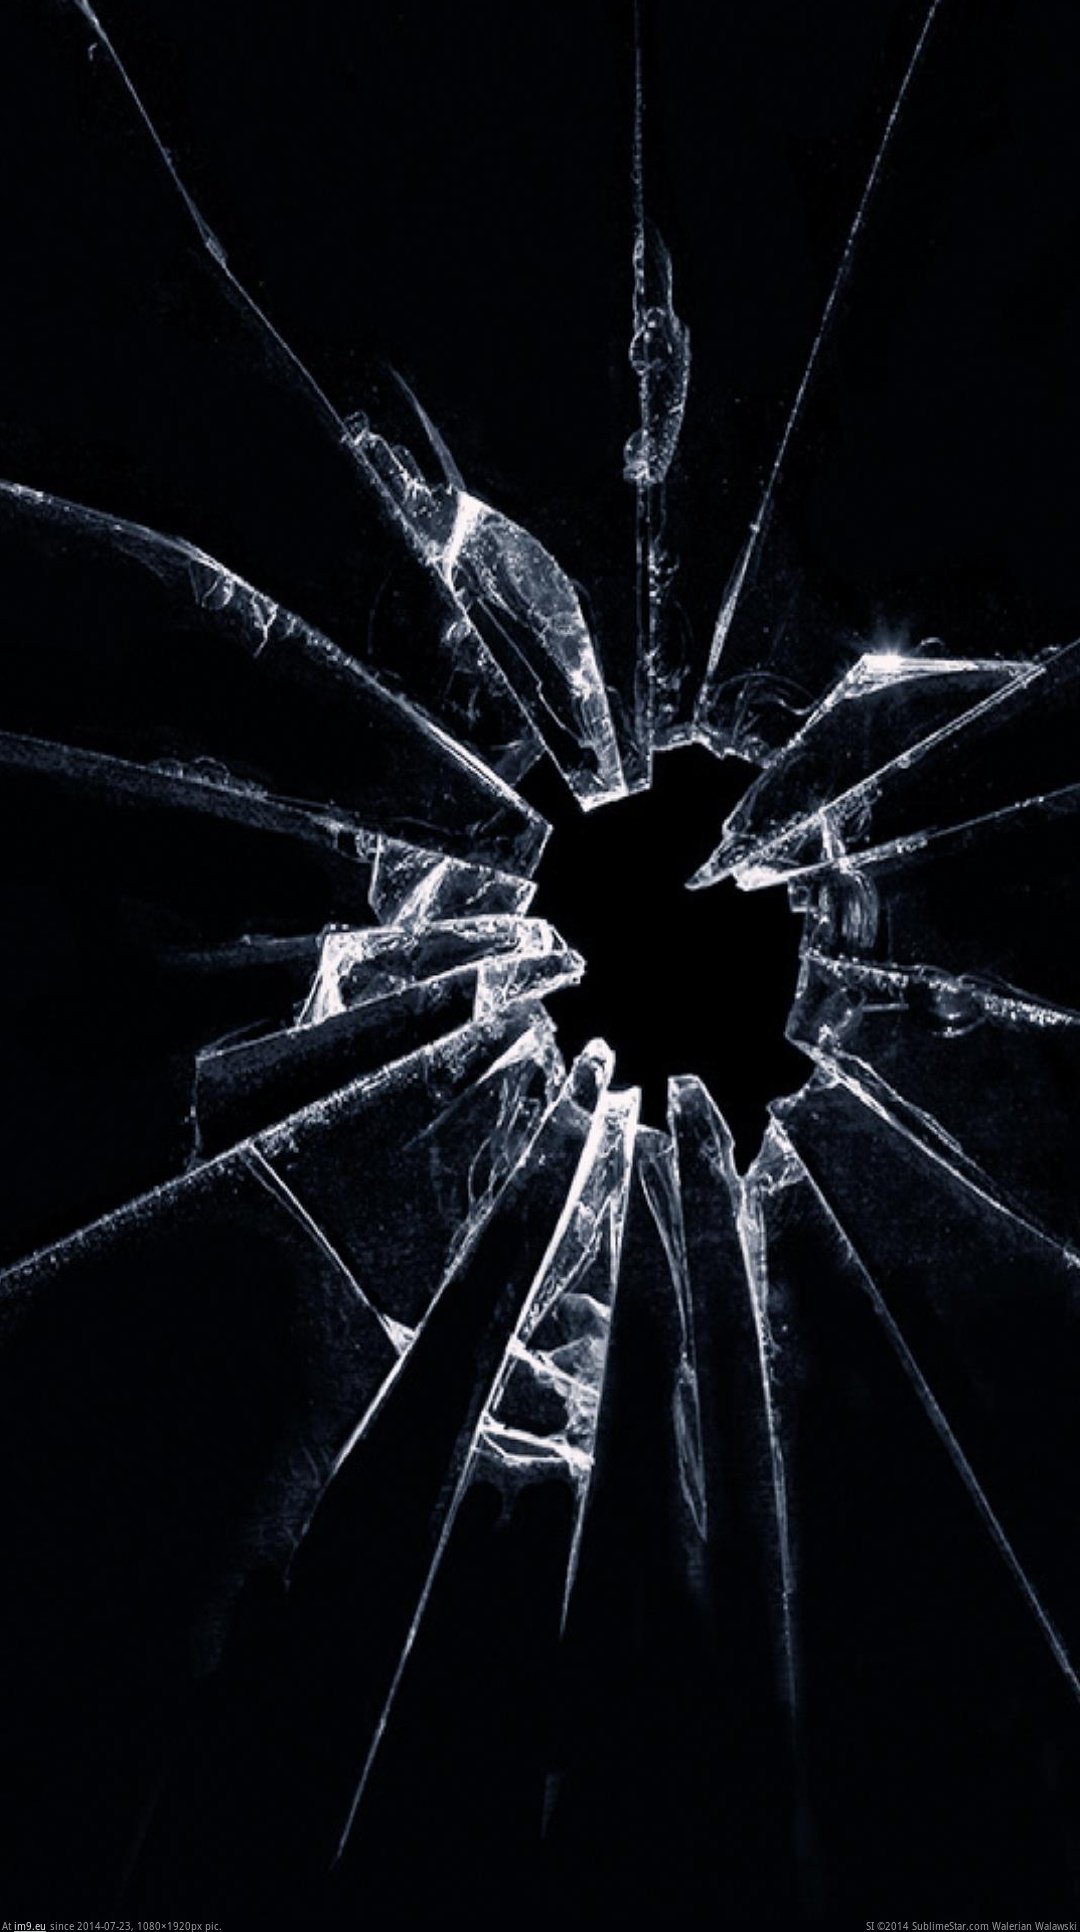 cracked_glass (in Idol6040Dpics)